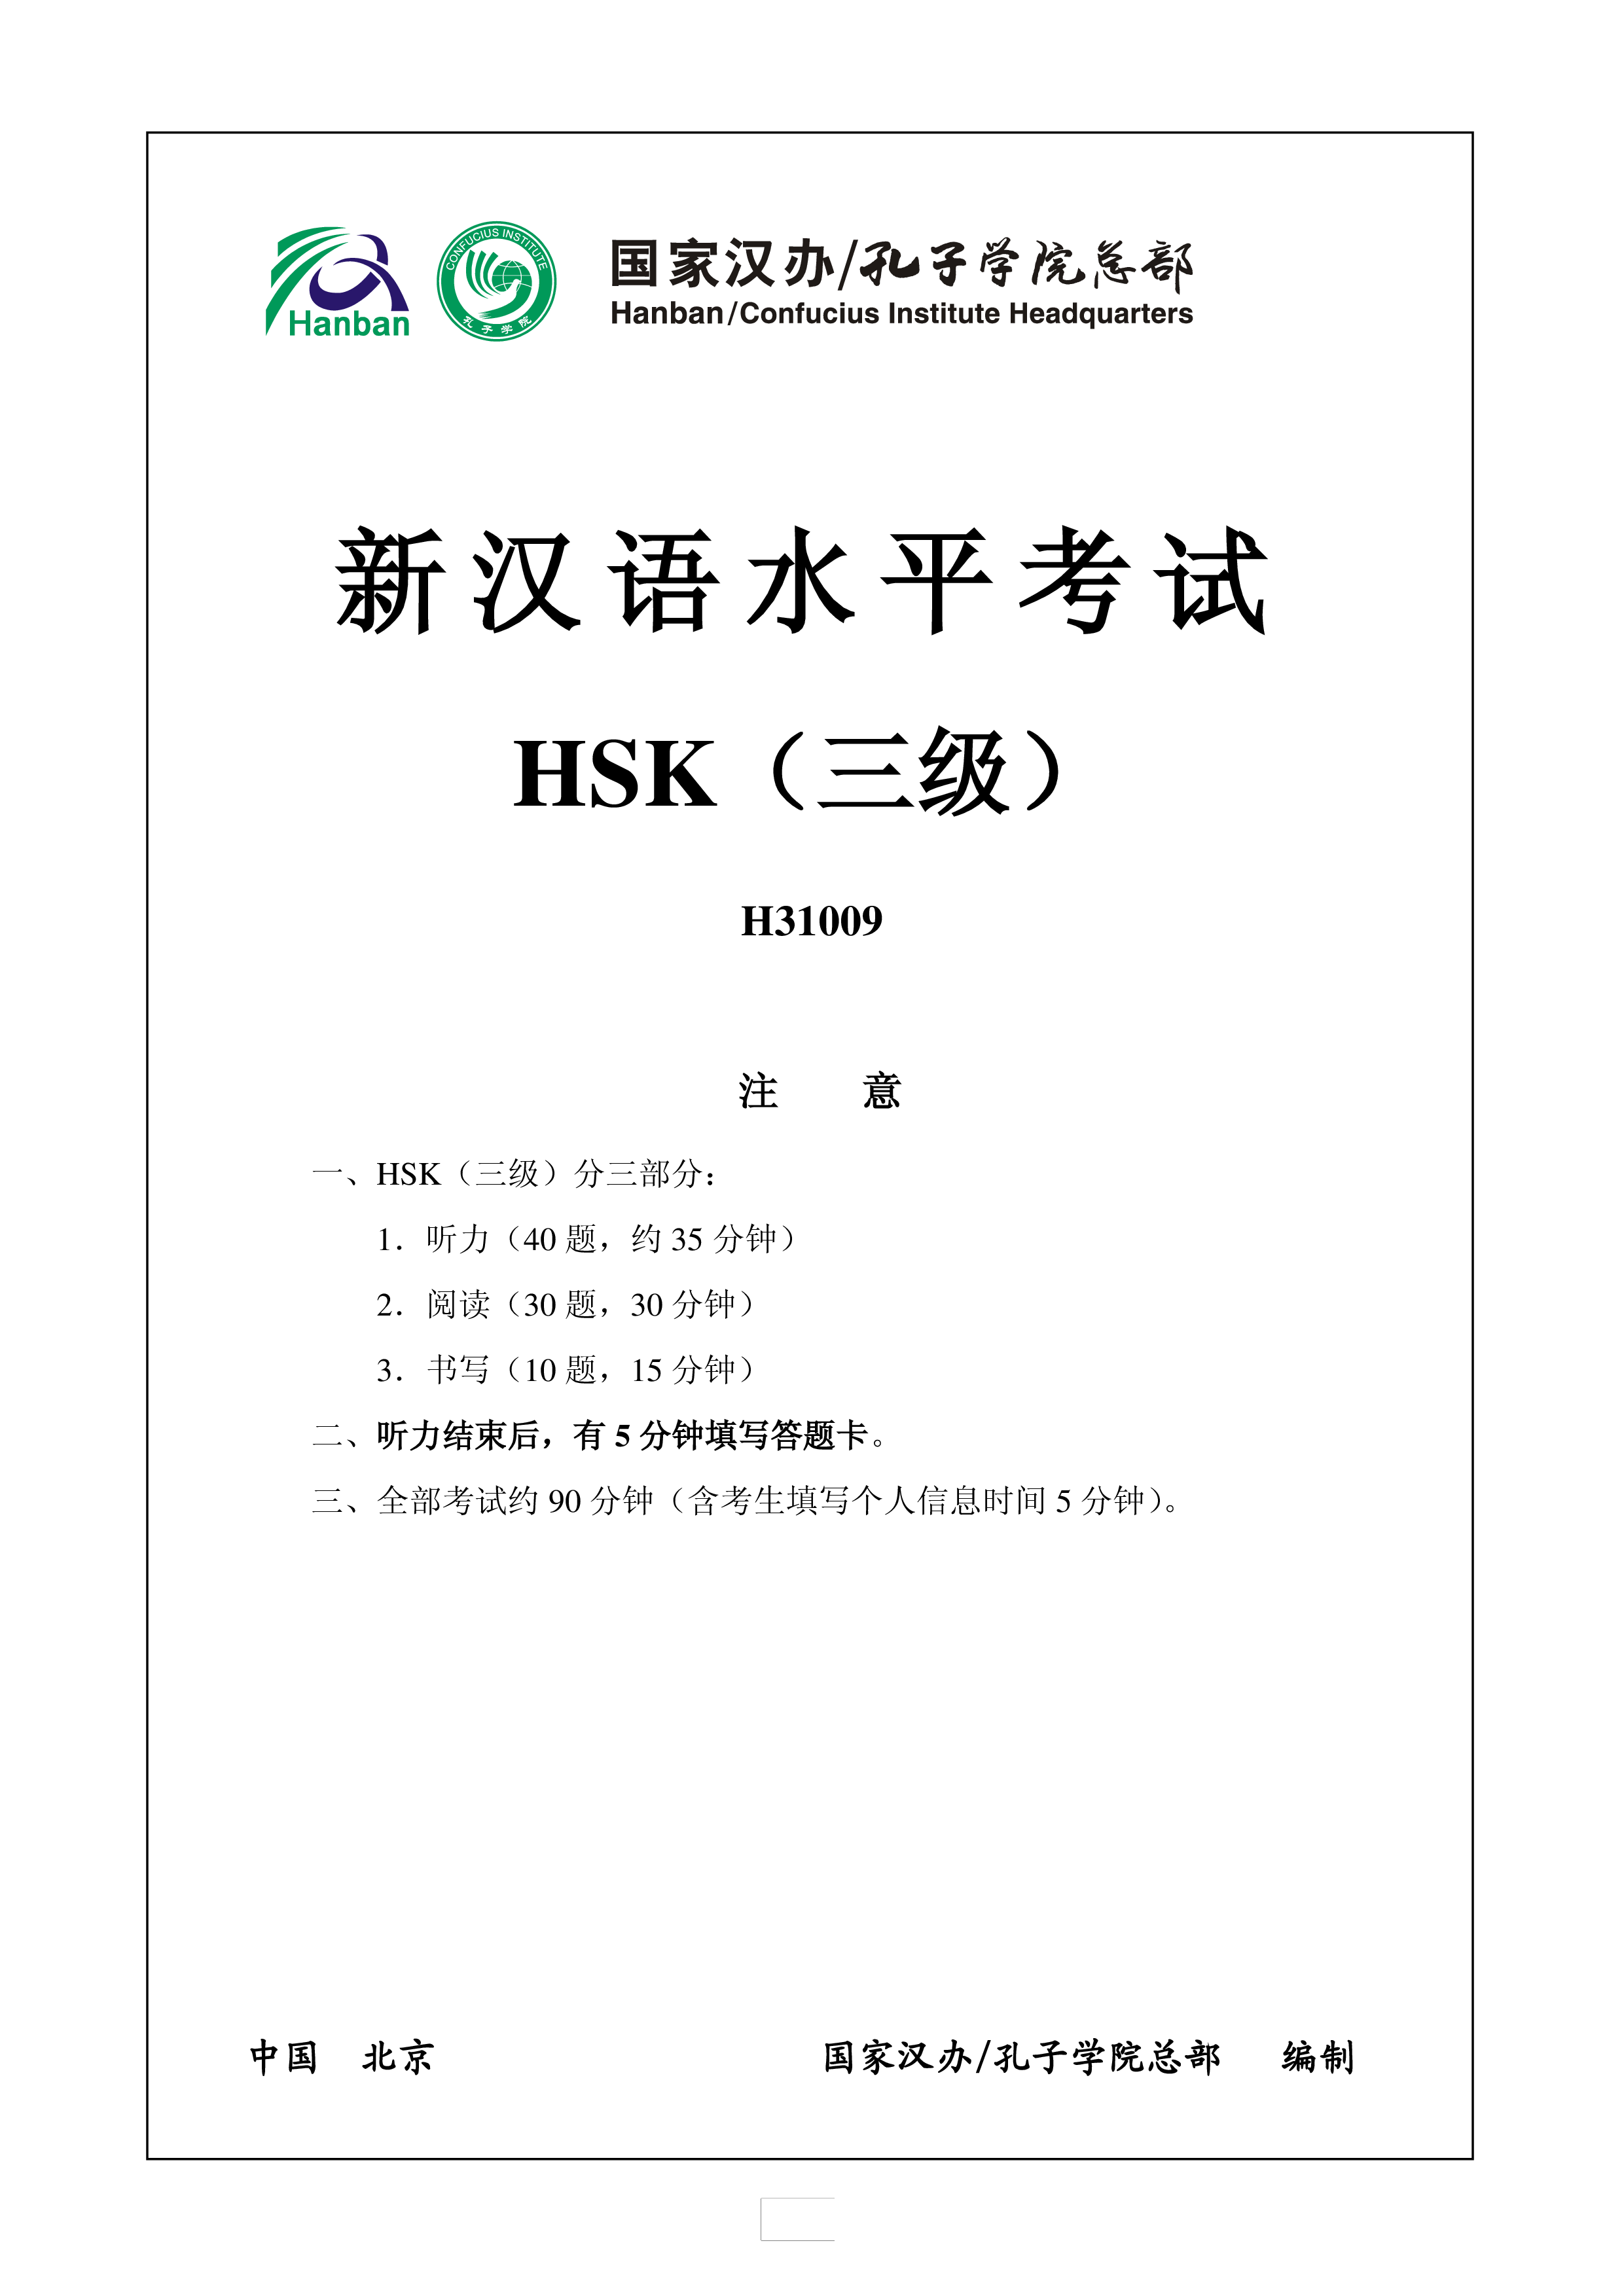 HSK 3 H31009 Exam Paper main image